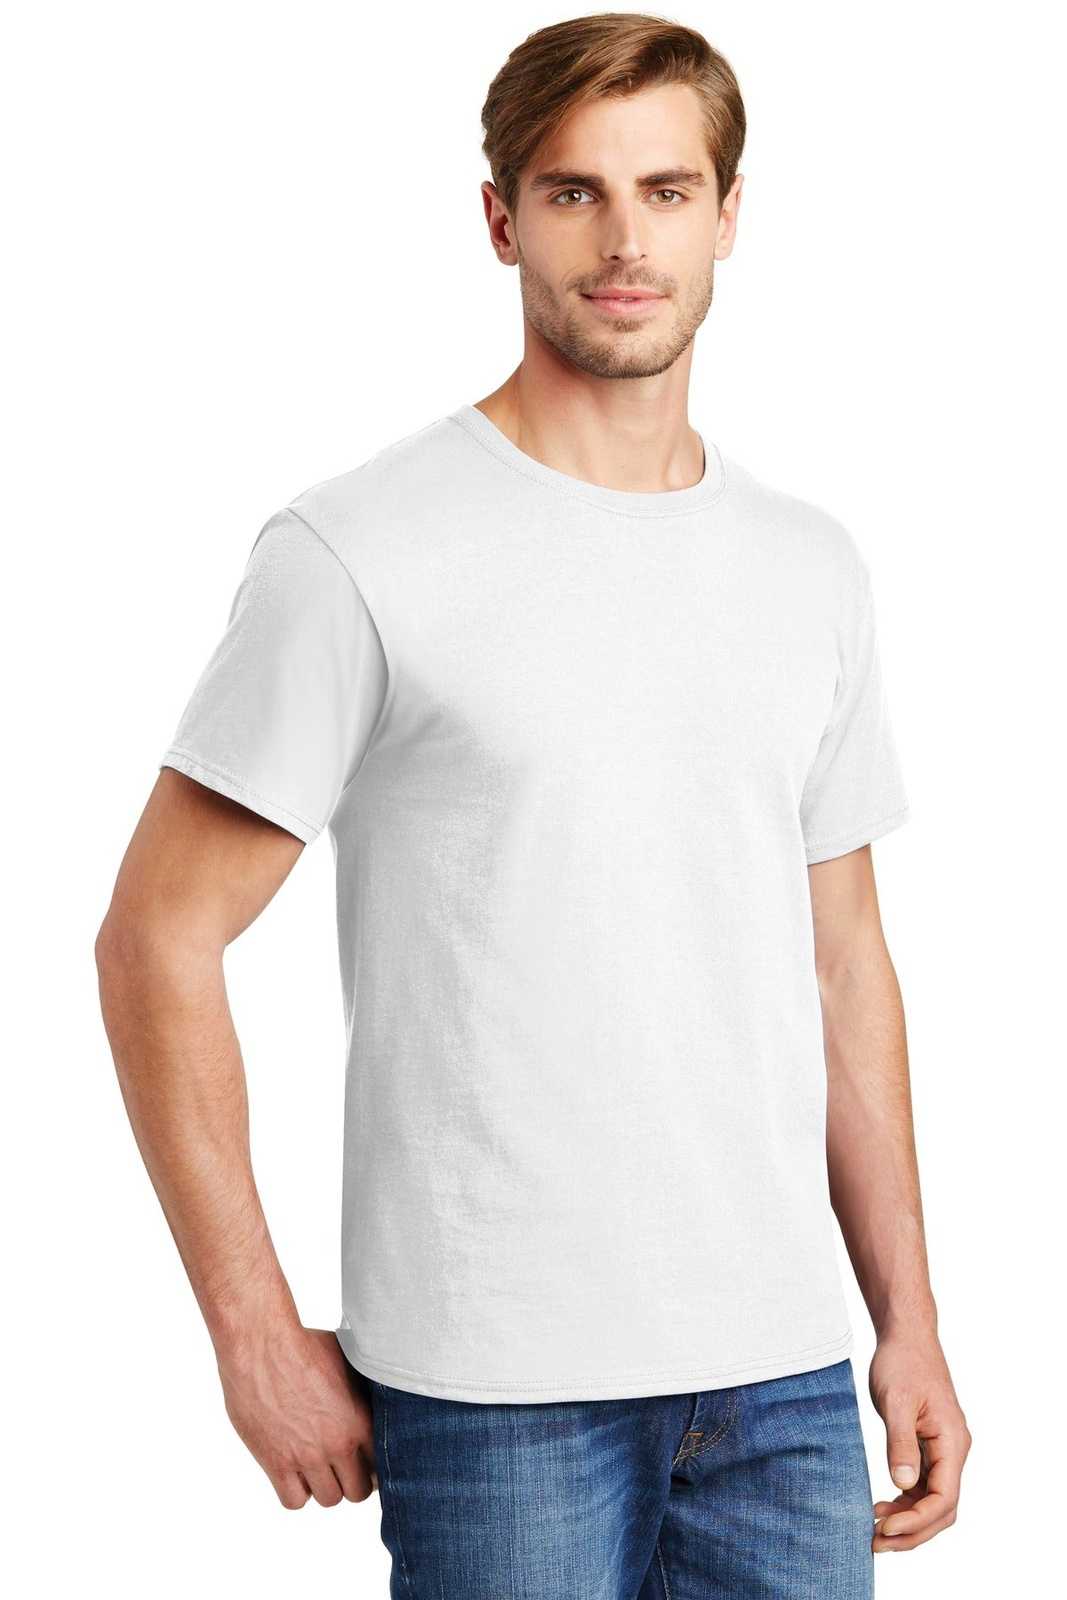 Hanes 5280 Comfortsoft 100% Cotton T-Shirt - White - HIT a Double